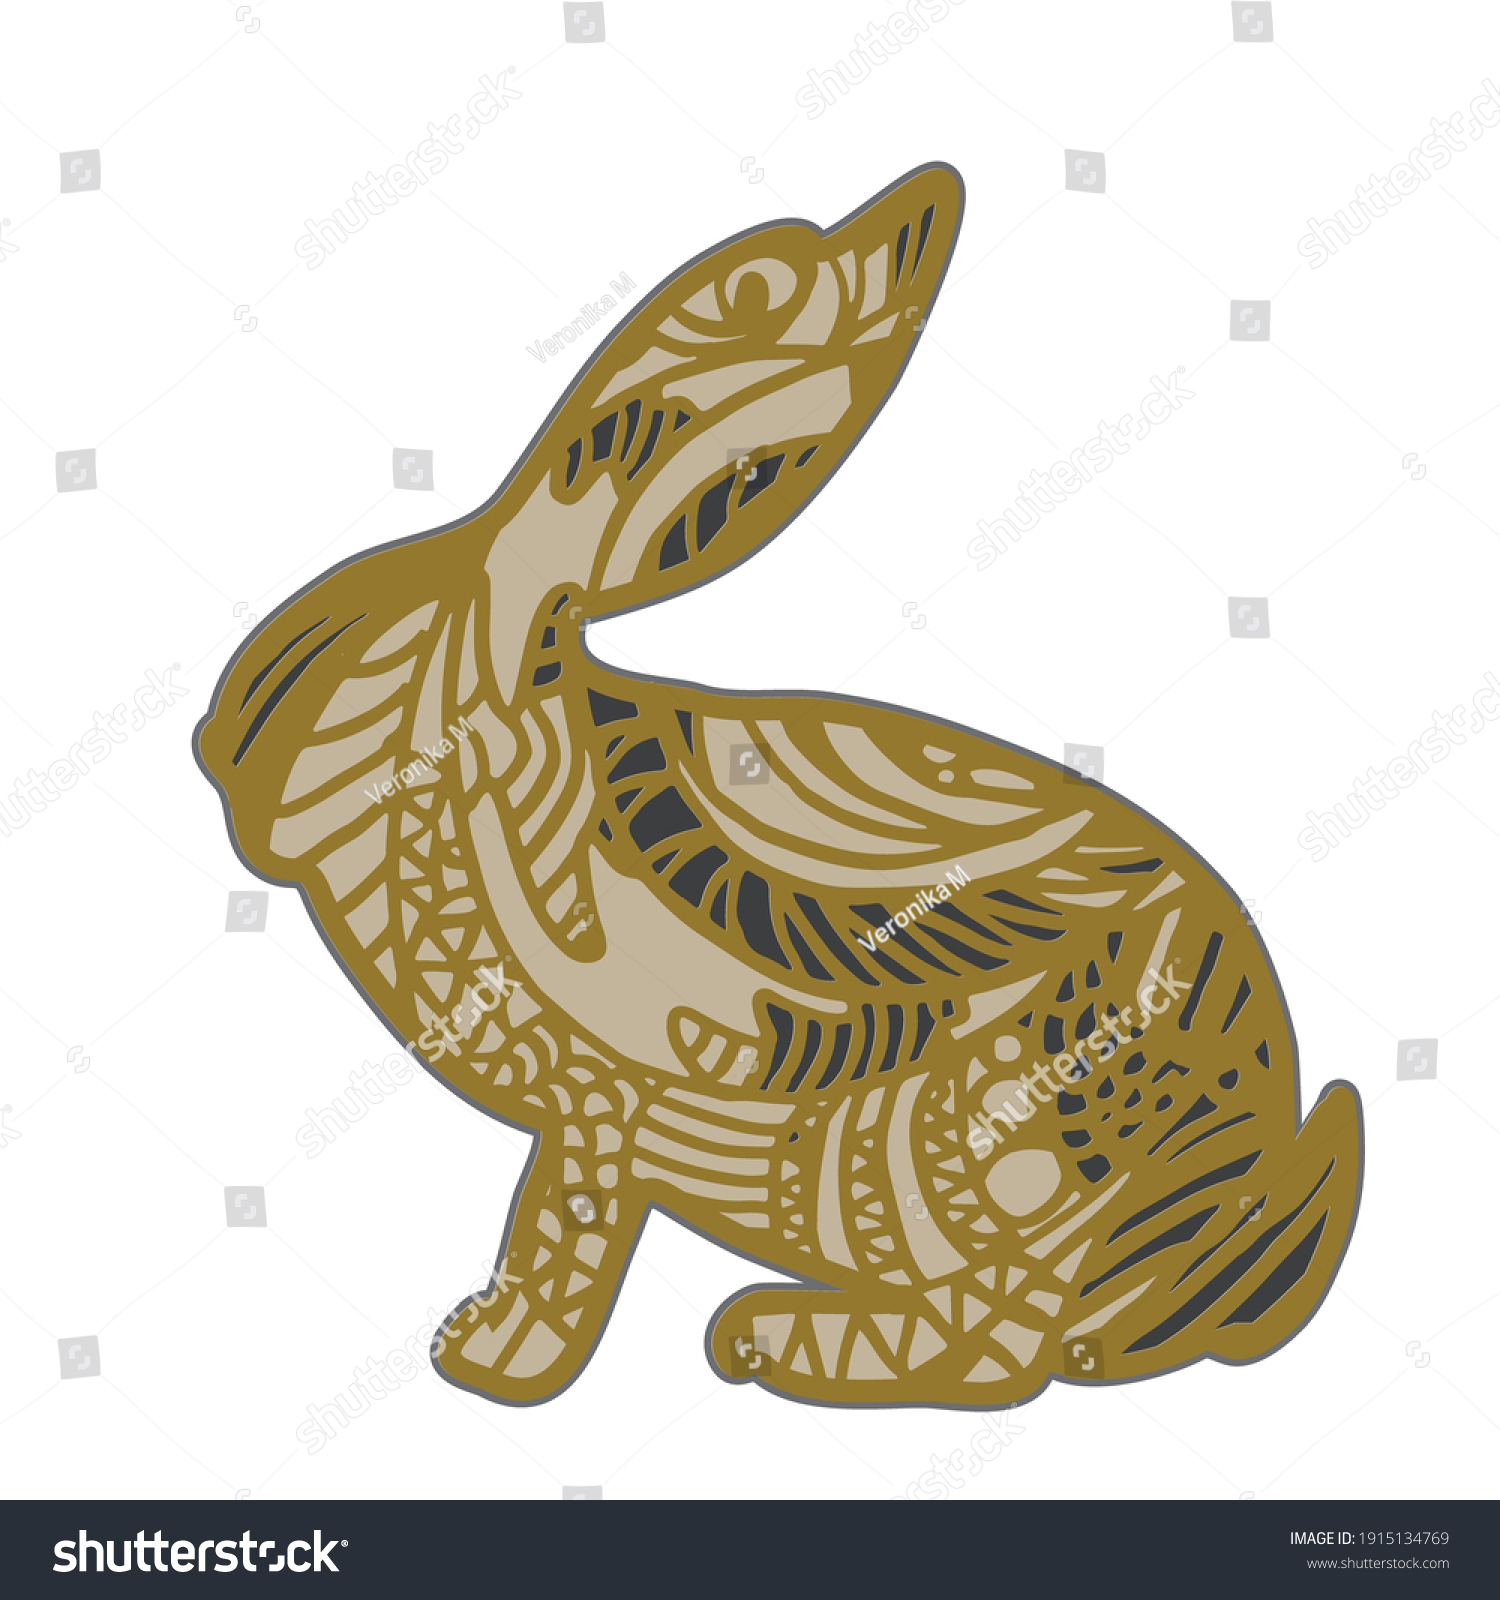 SVG of 3D layered mandala bunny illustration. Golden and grey svg